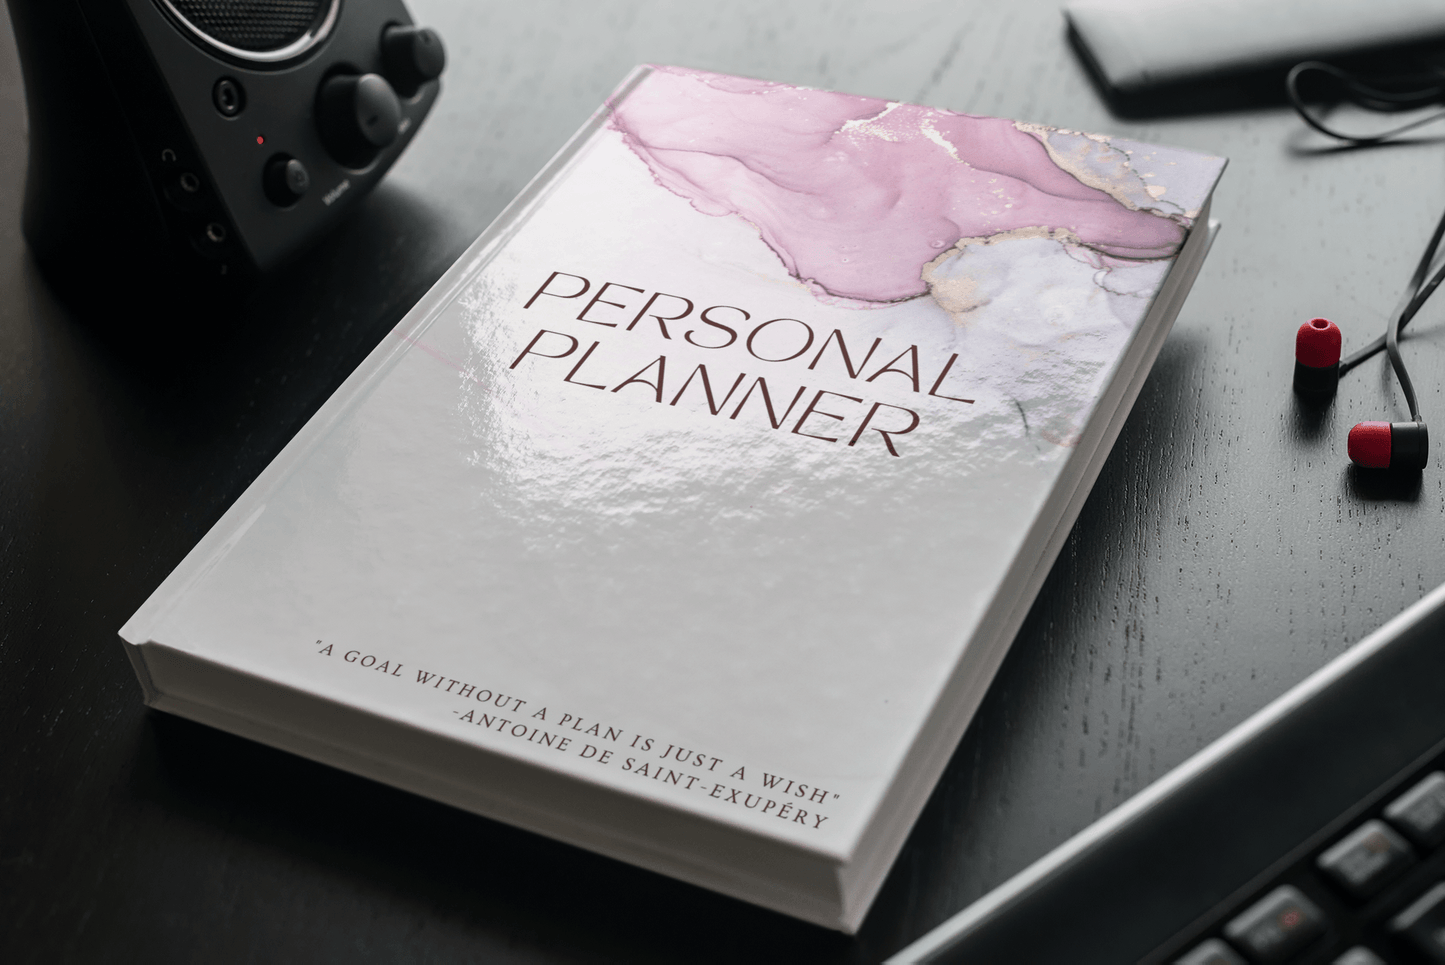 Printable Personal Planner & Journal | FREE Download | 10x TapCard